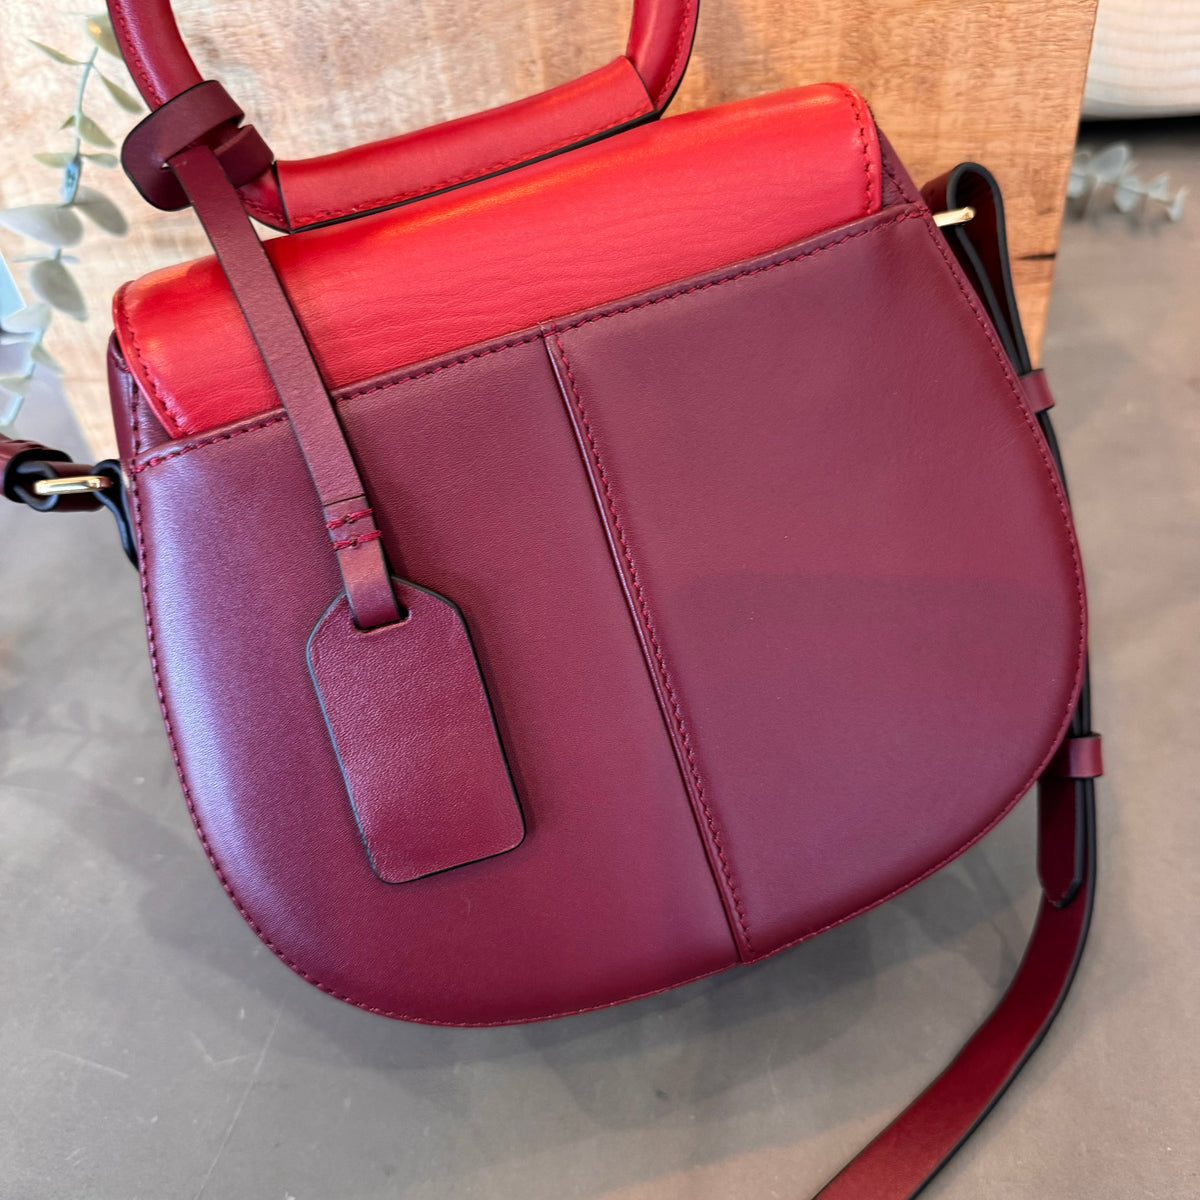 Radley crossbody bag leather red/wine O/S